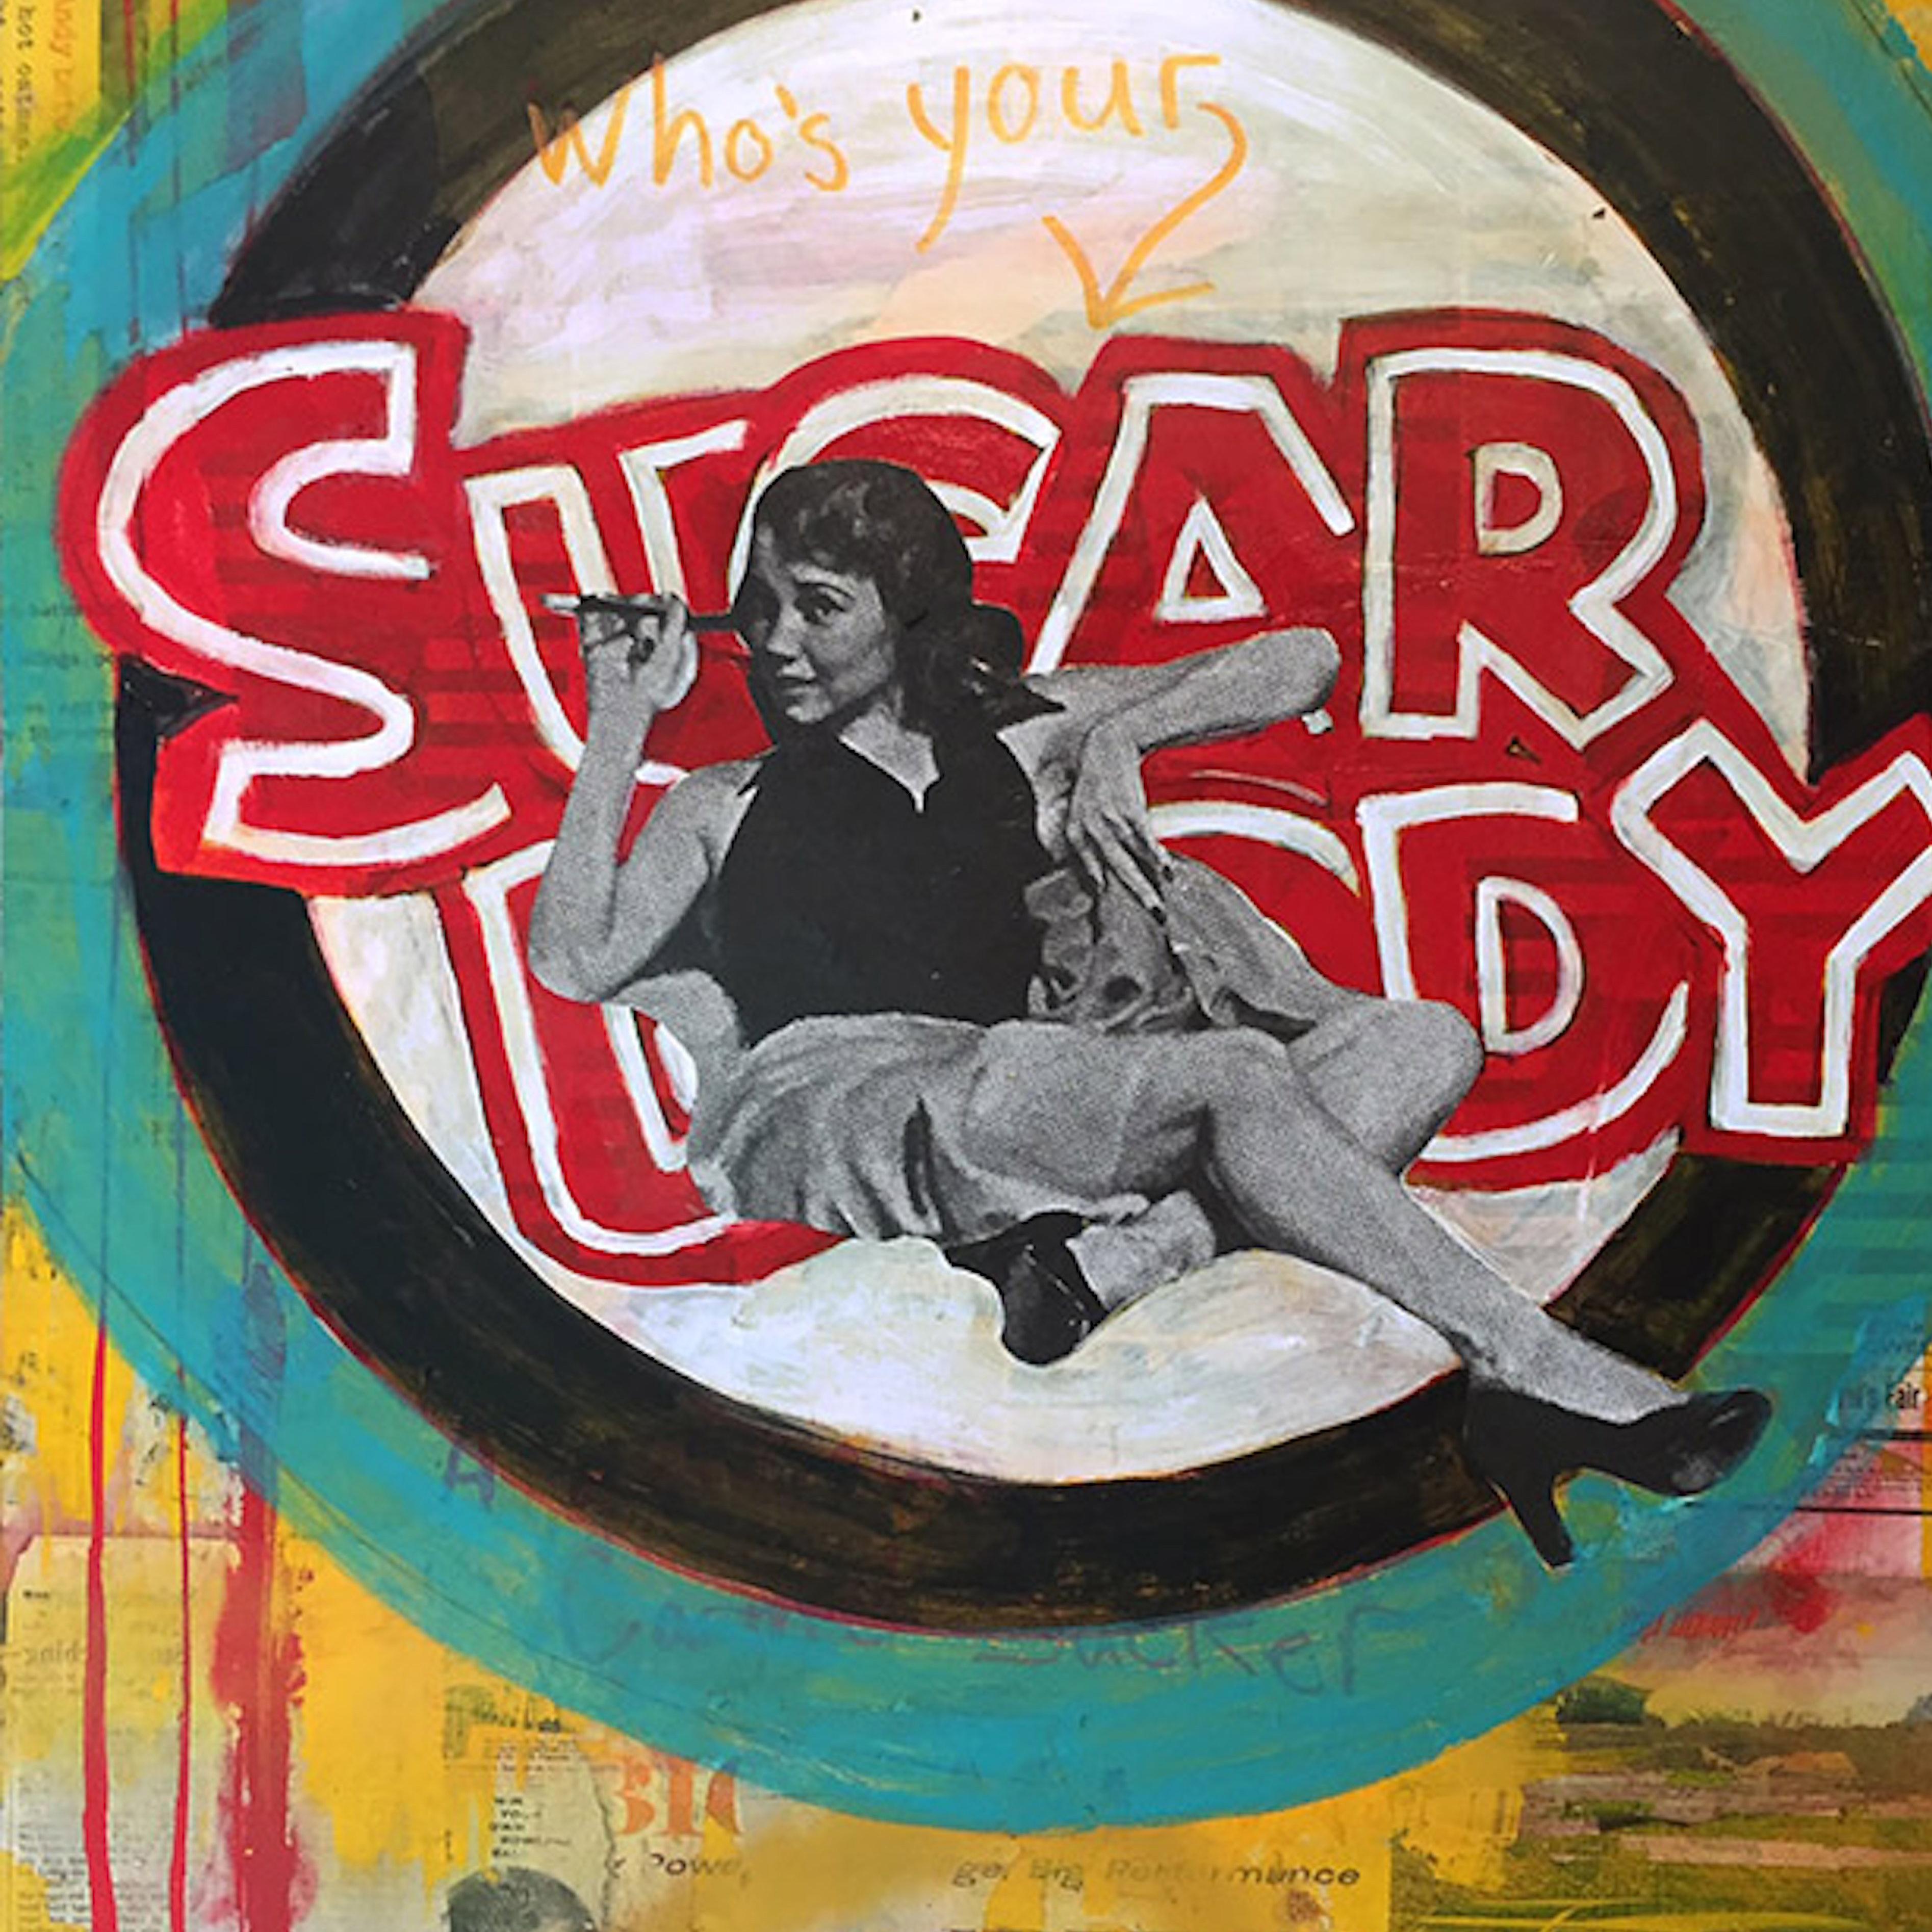 Who Your Daddy (Tu es monddy) - Pop Art Mixed Media Art par David Morico